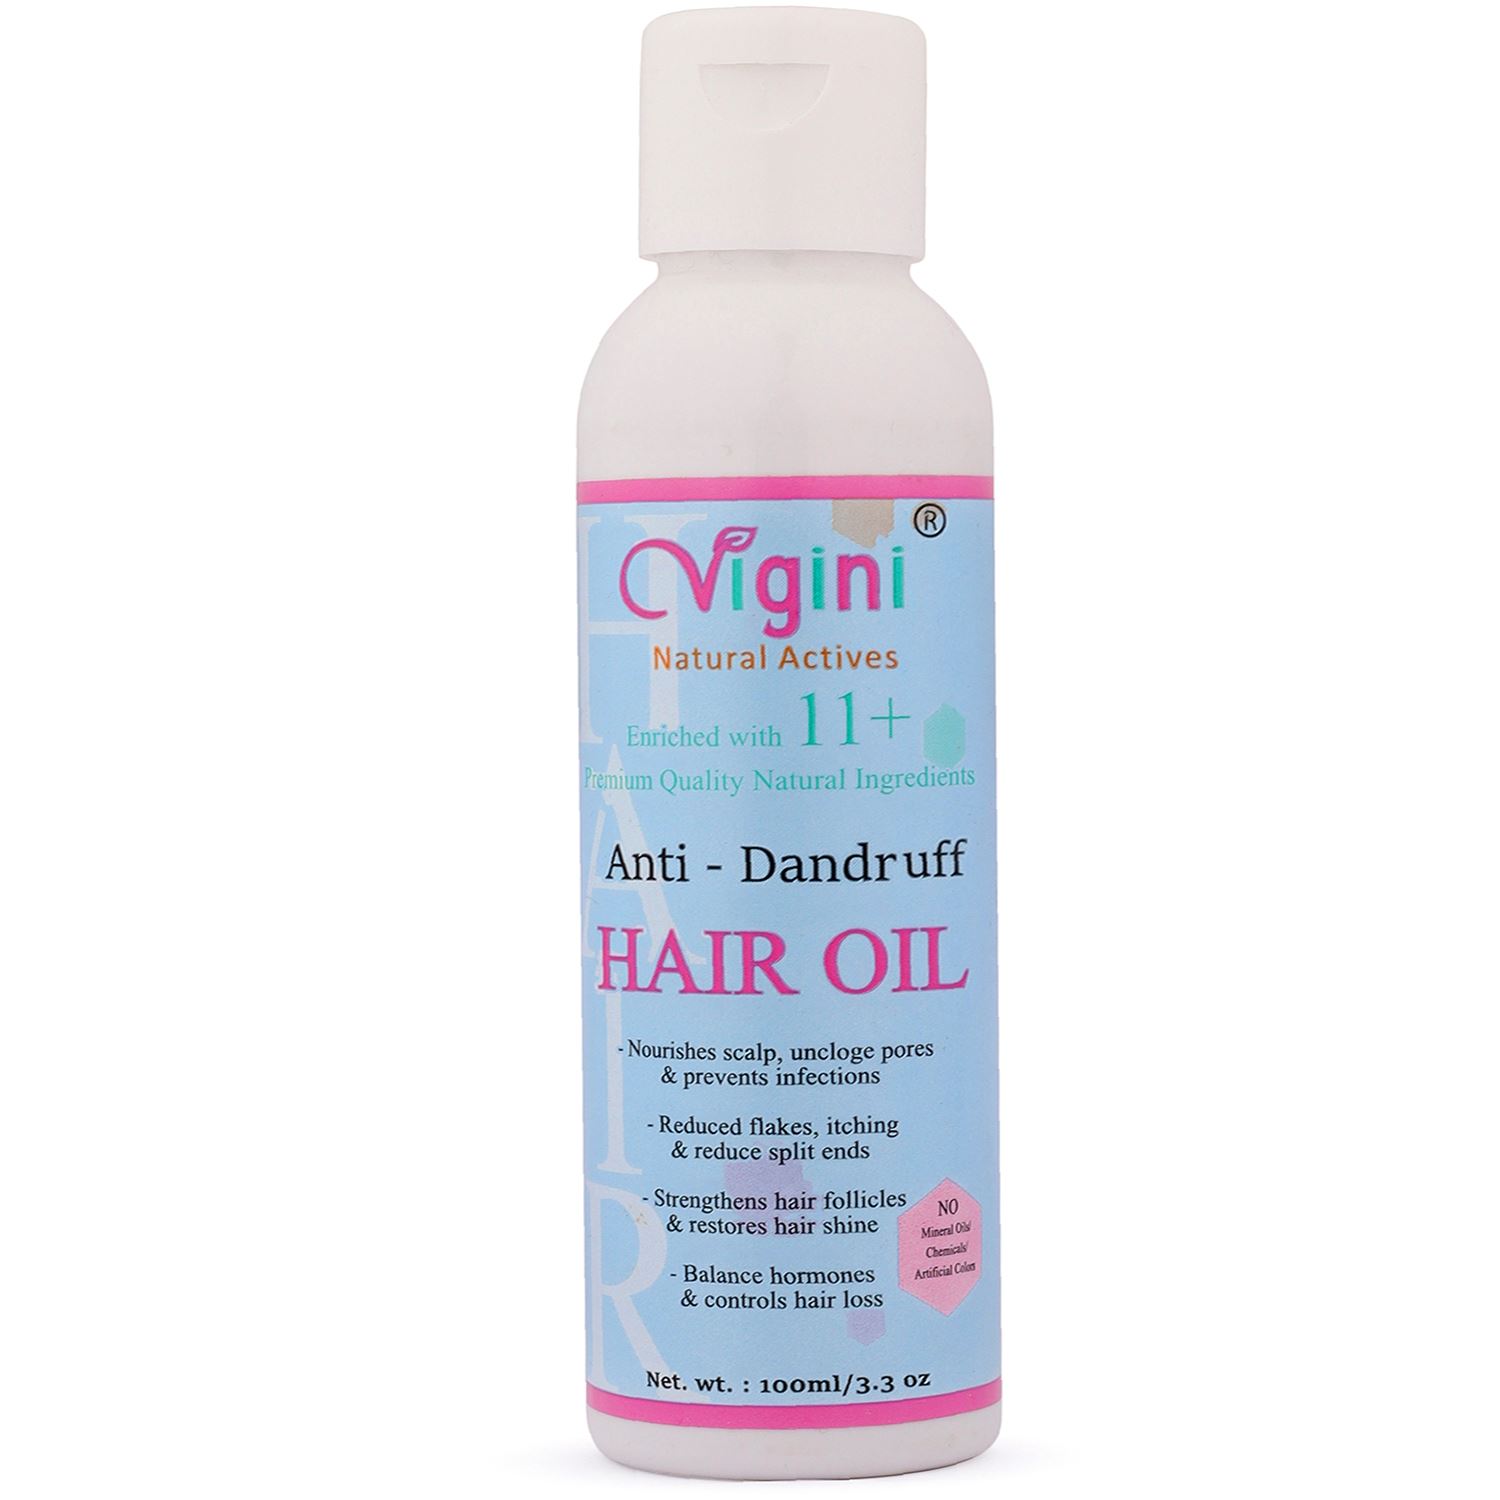 Vigini Natural Anti-Dandruff Itchy Scalp Hair Care Oil Provides Hair Growth, Nourishment, Silky & Shining Hair For Men Women 100 ml